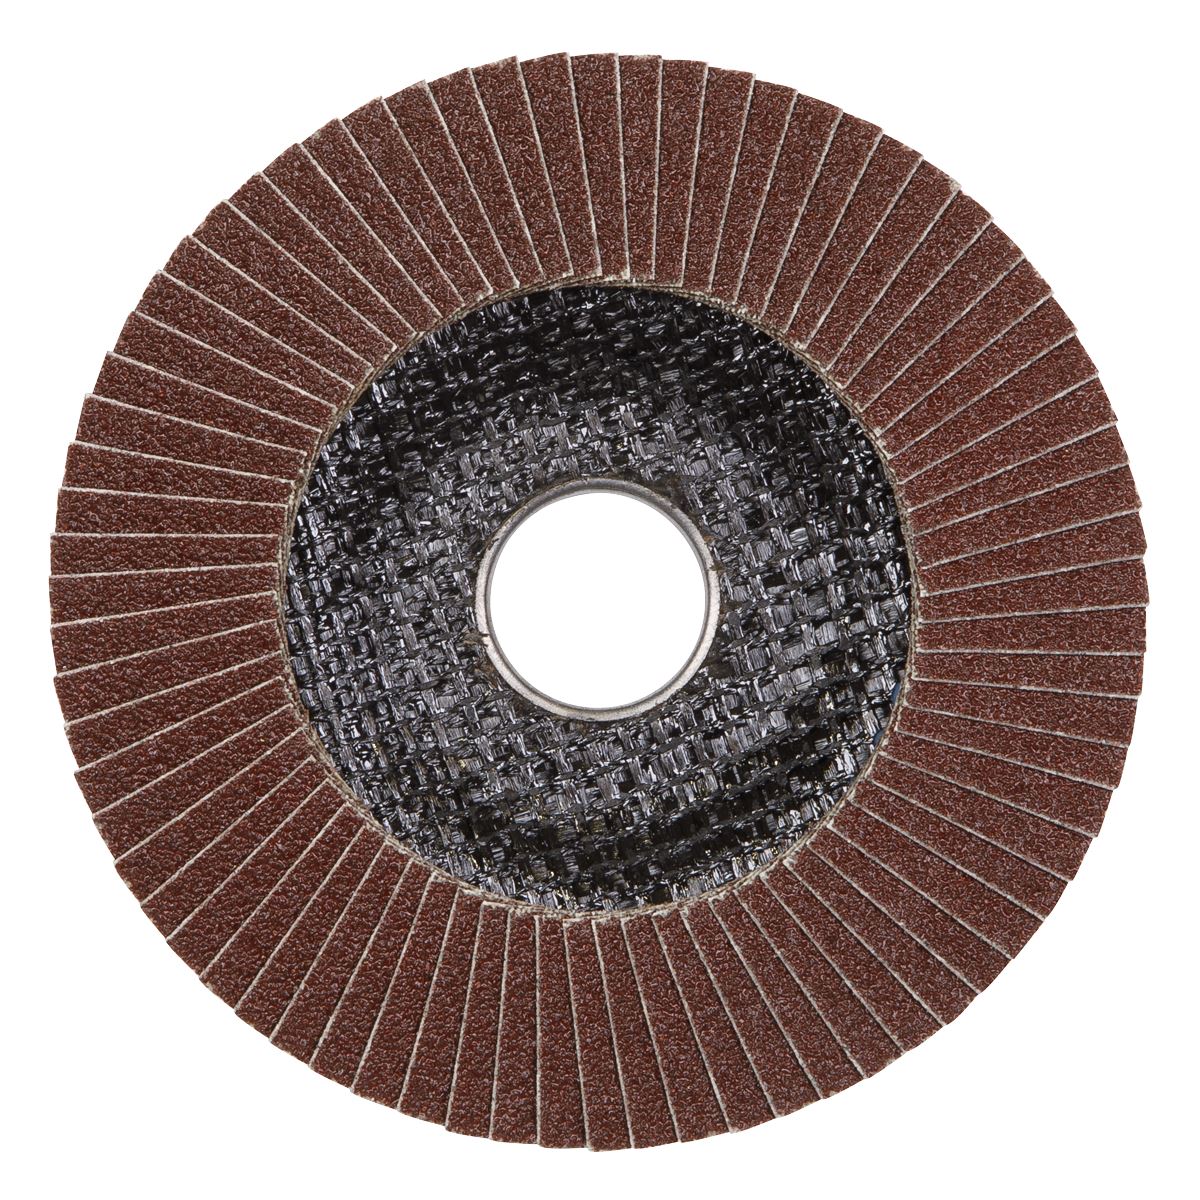 Sealey Flap Disc Aluminium Oxide Ø100mm Ø16mm Bore 80Grit